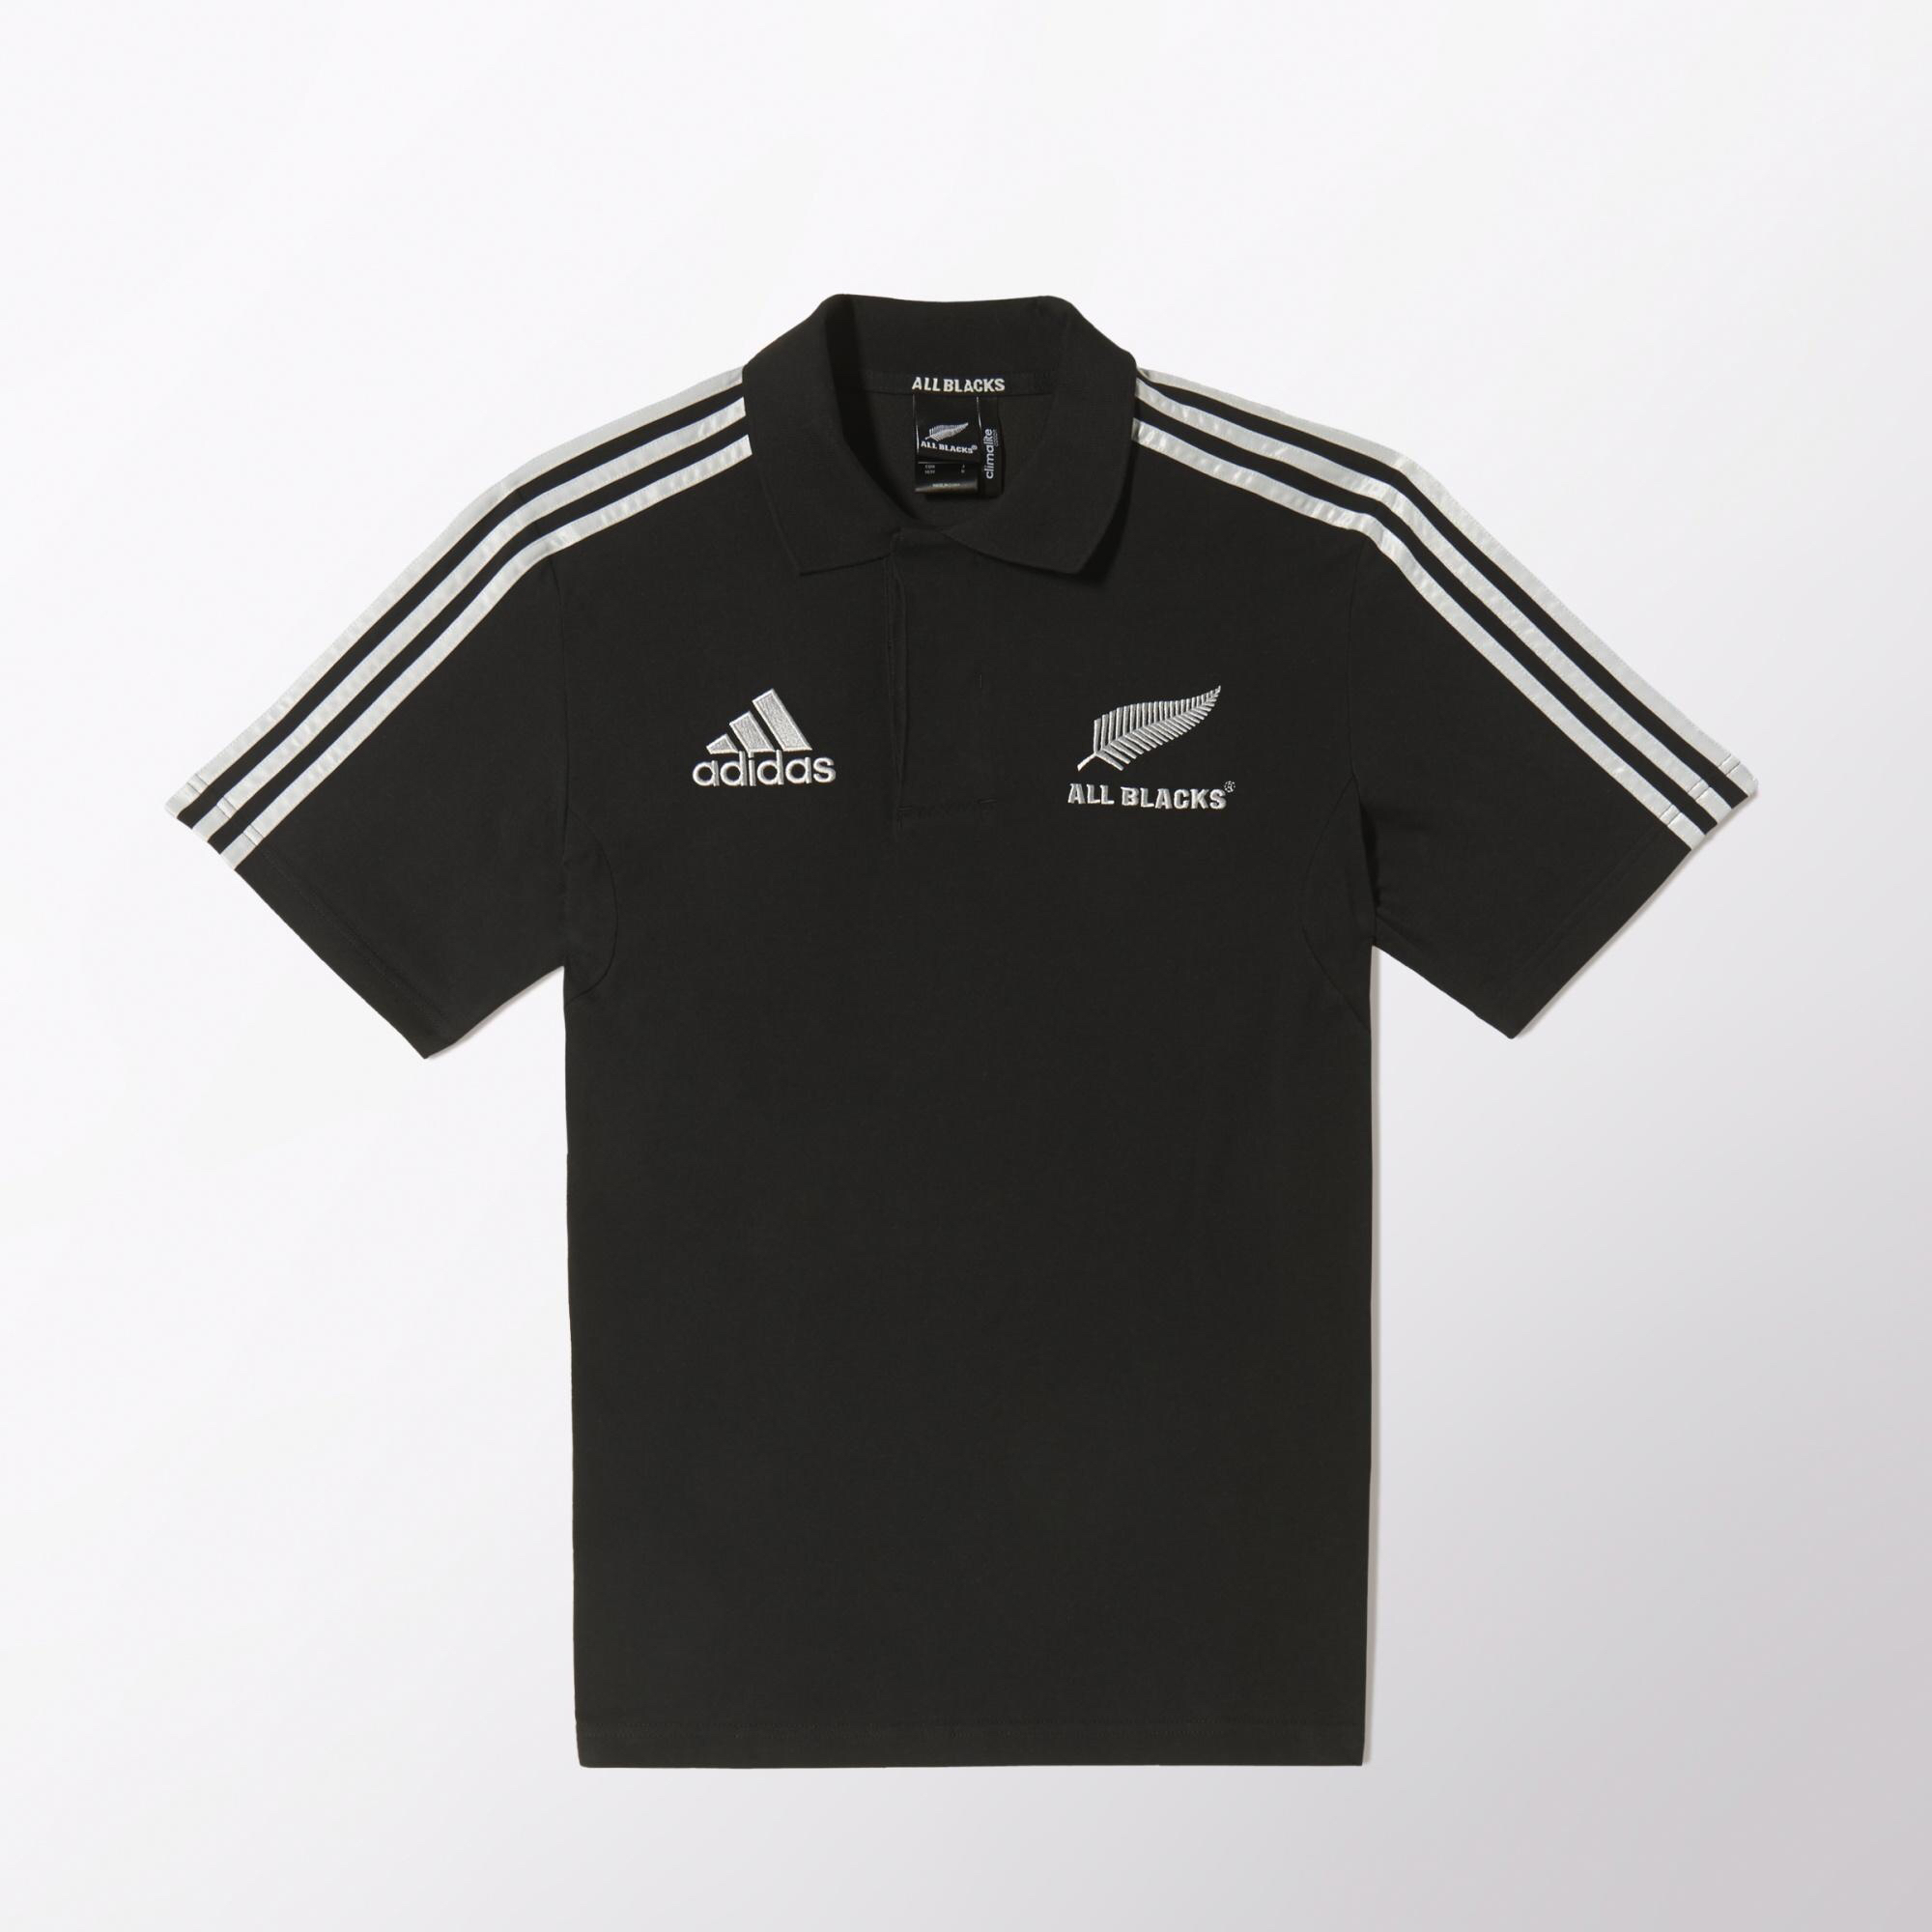 Adidas All Black Polo - The Football Factory